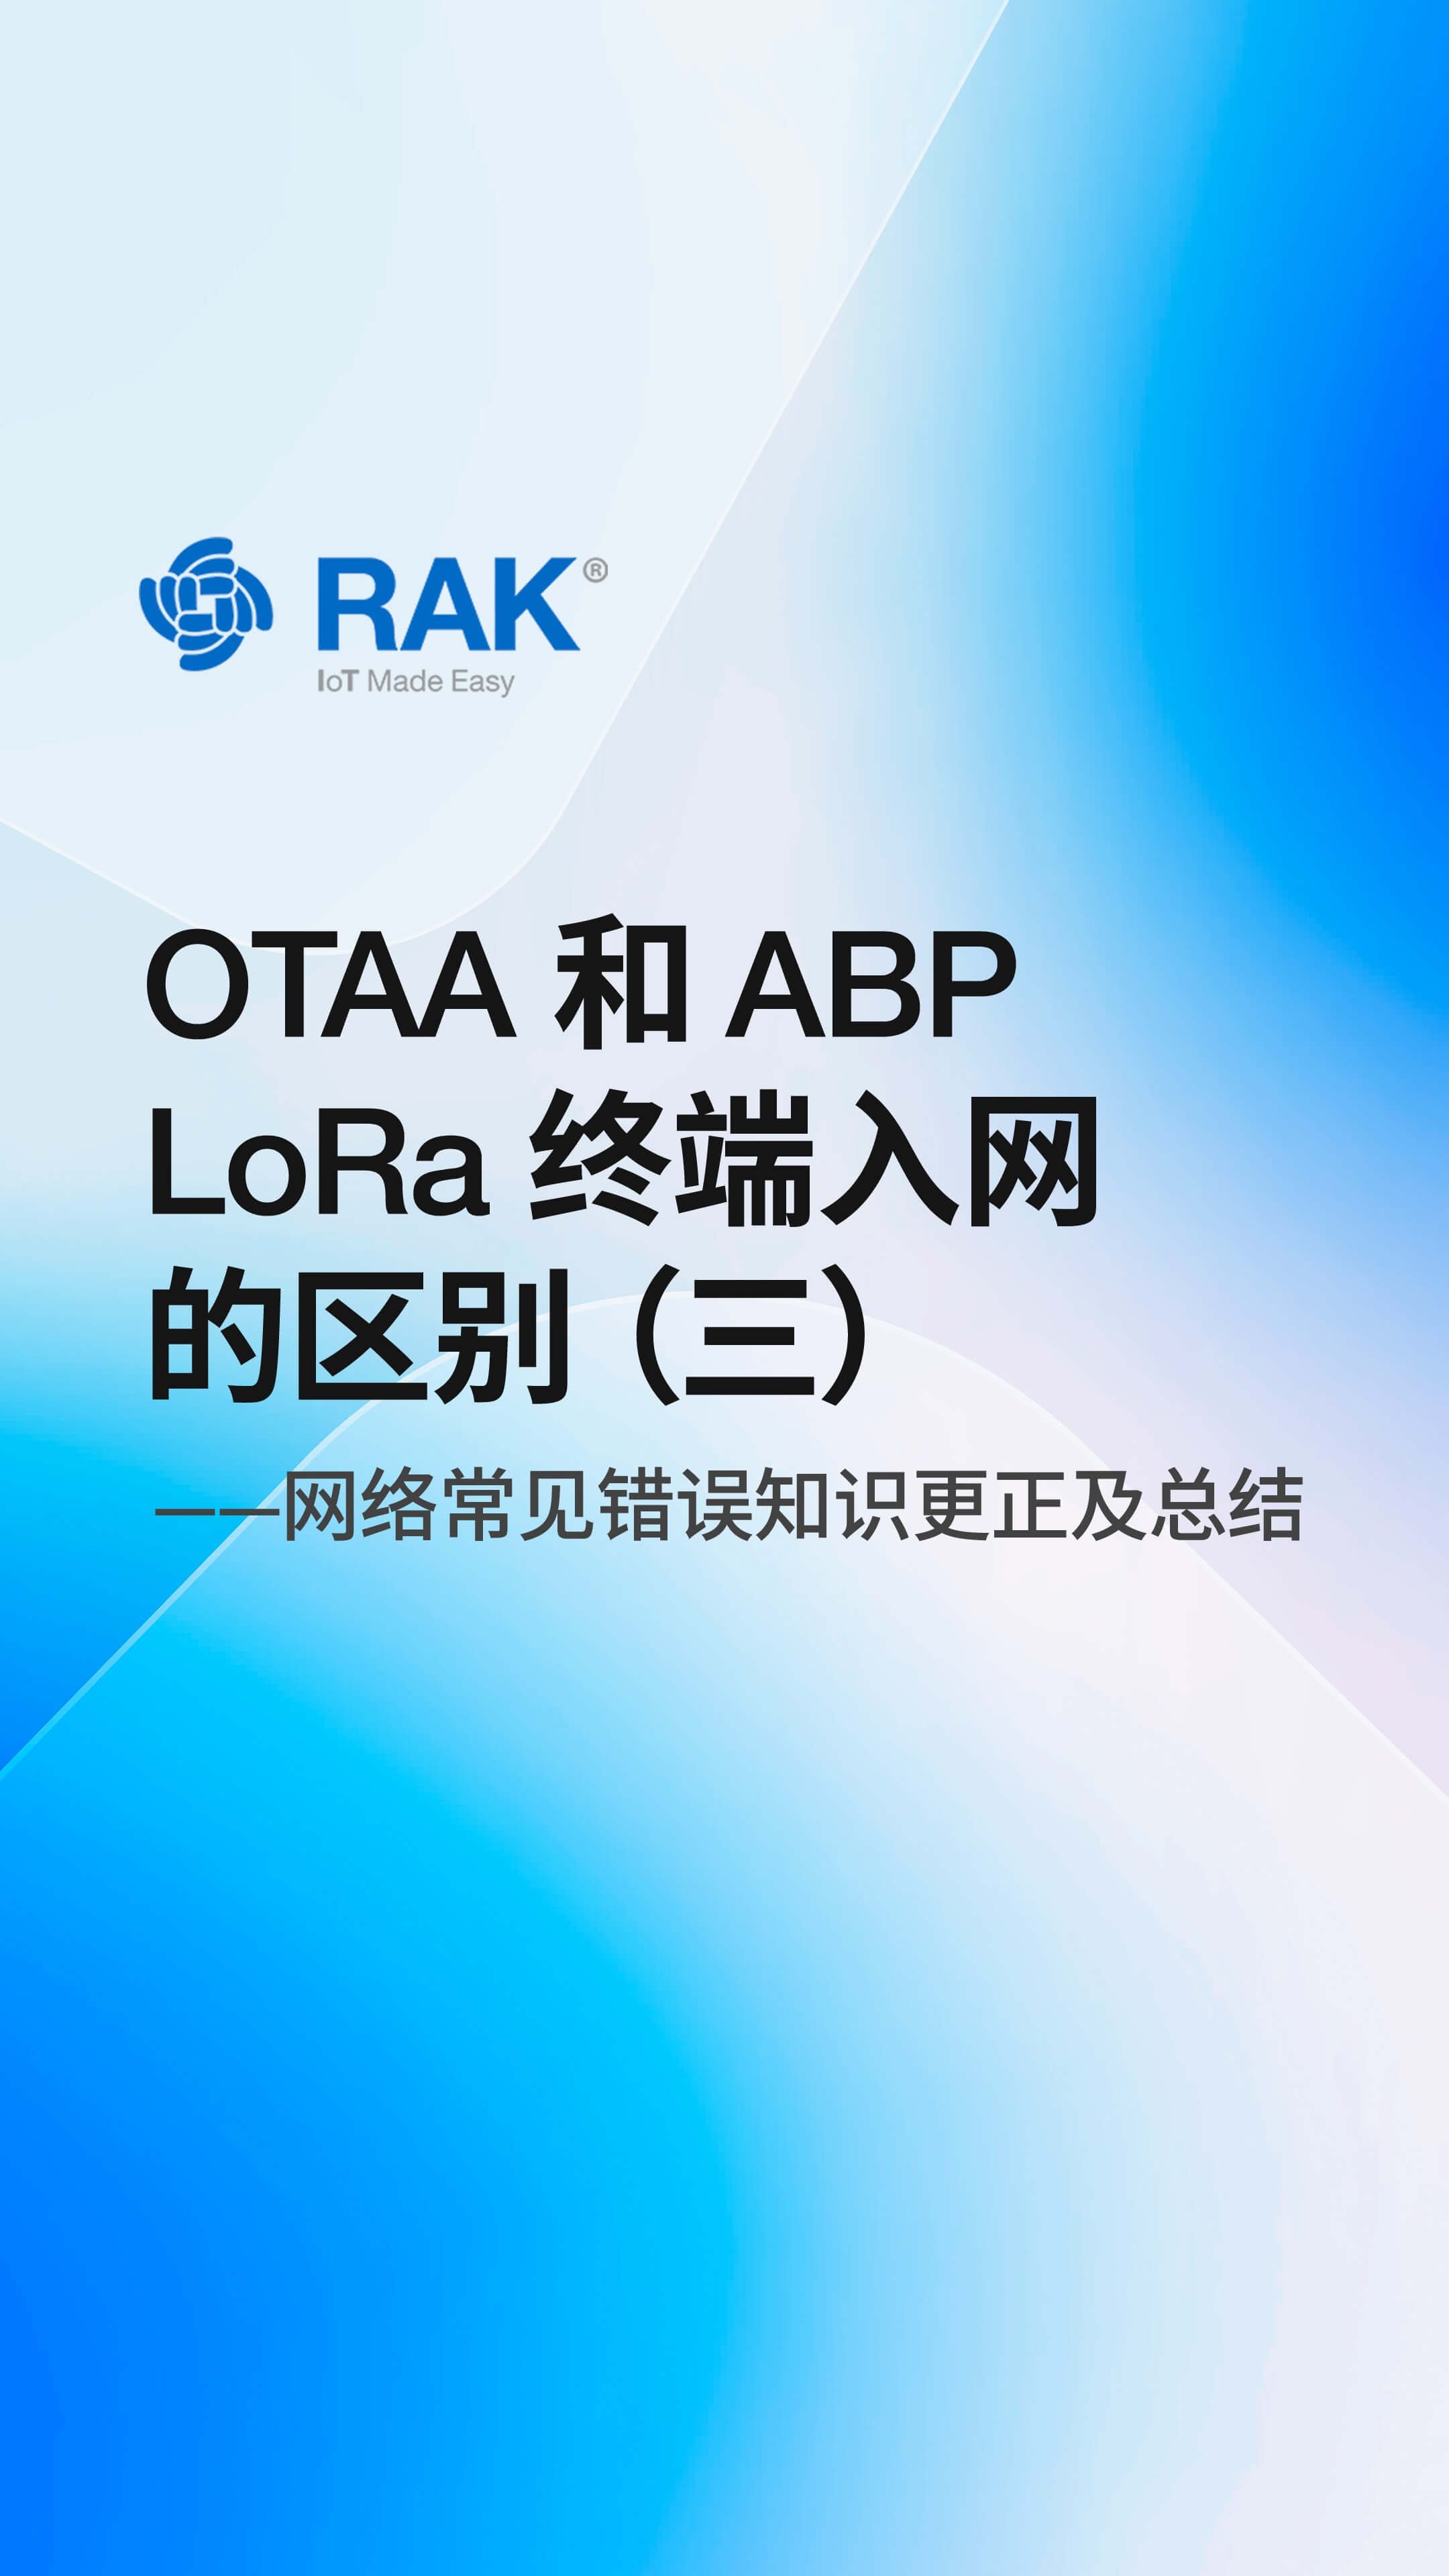 LoRa?終端入網方式OTAA與ABP的區別：網絡常見錯誤知識更正及總結 #LoRa終端  #LoRa故事匯 